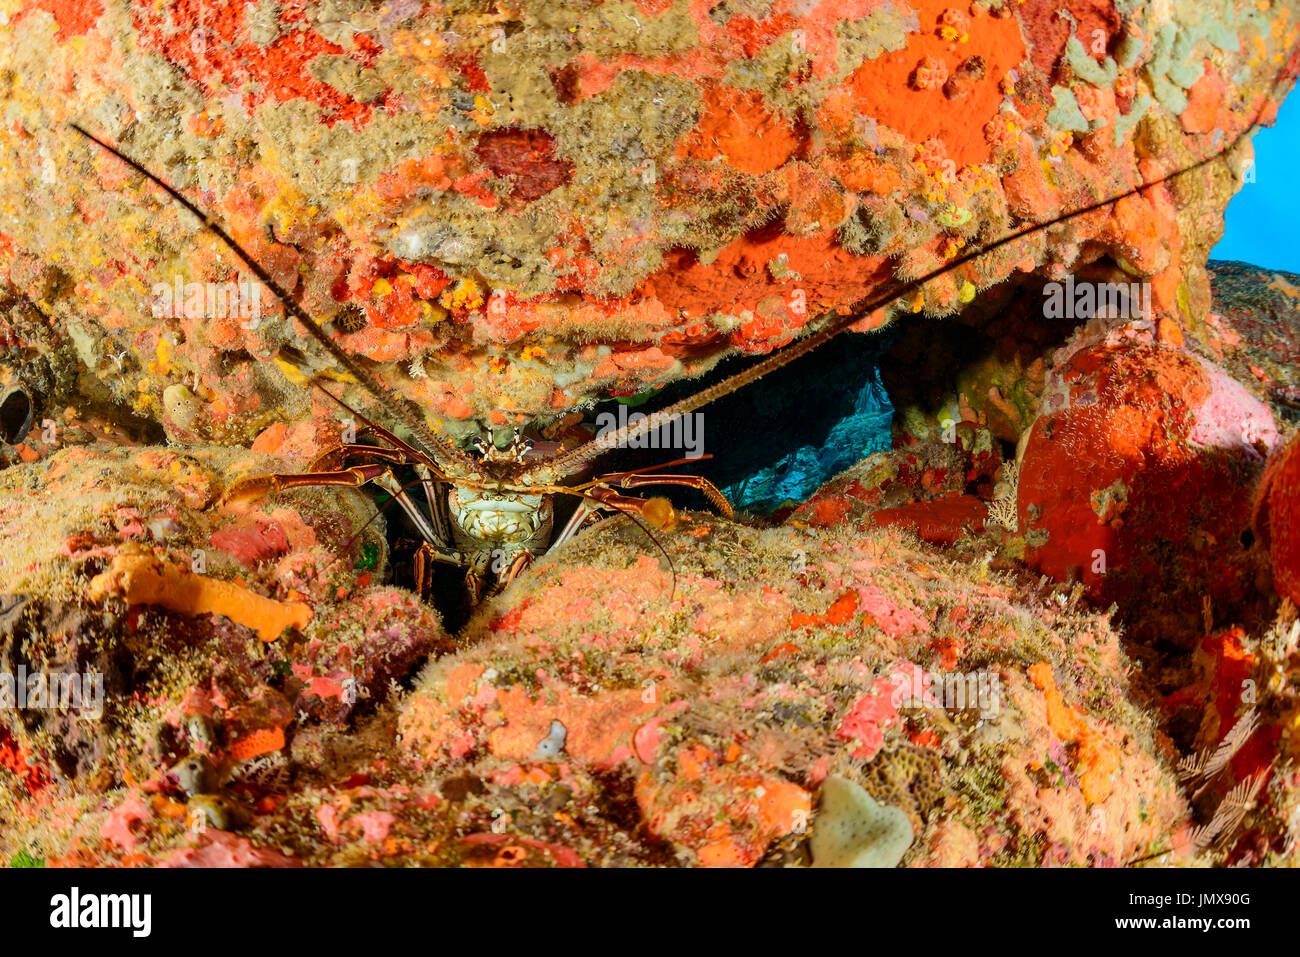 Panulirus argus, West Indian spiny lobster or Langouste, Cooper Island, British Virgin Islands, Caribbean Sea Stock Photo